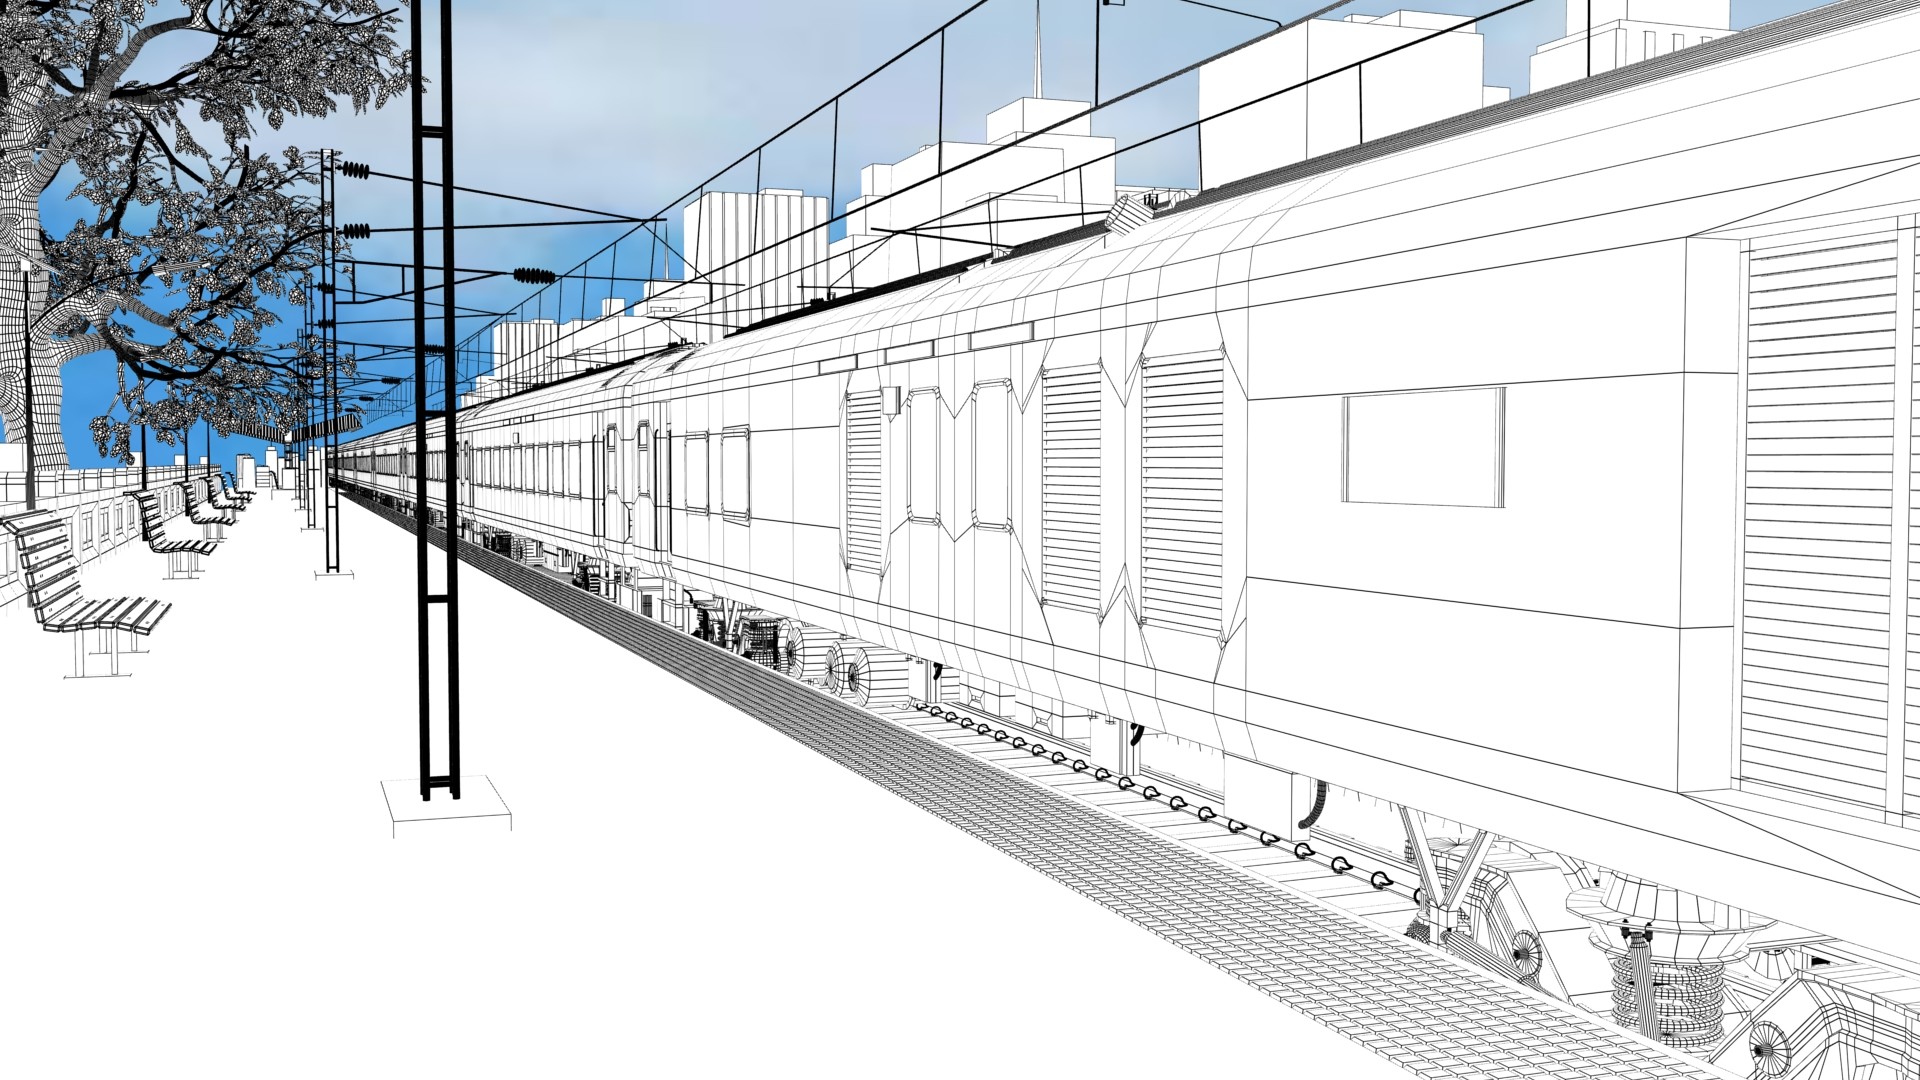 Aggregate 167+ sketch of railway platform